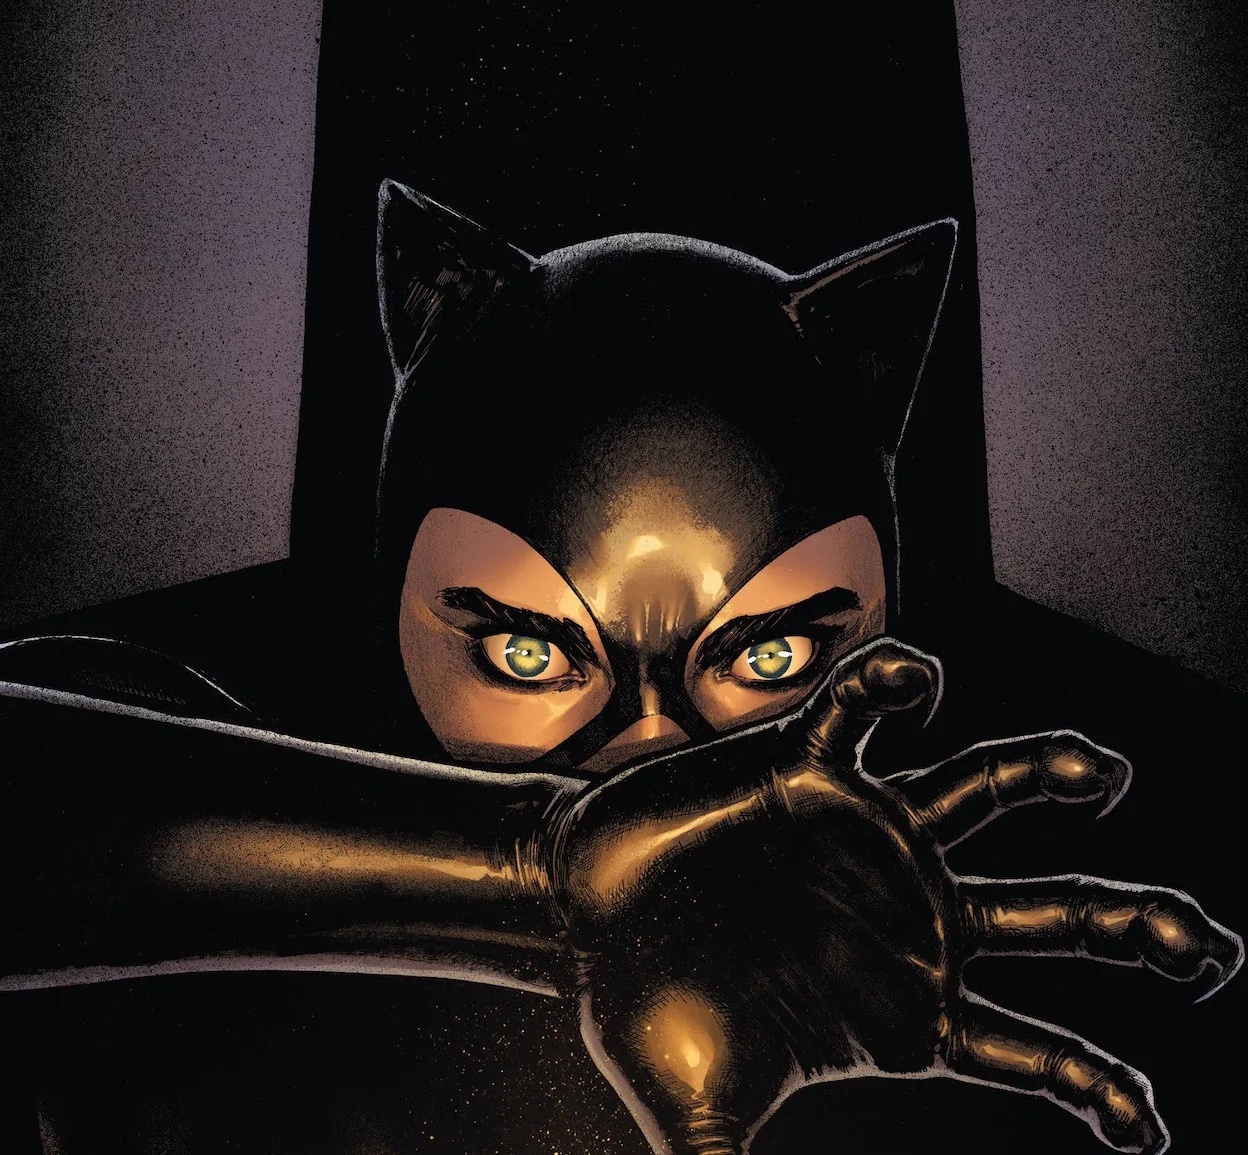 'Batman: Killing Time' #2 establishes Catwoman's interest